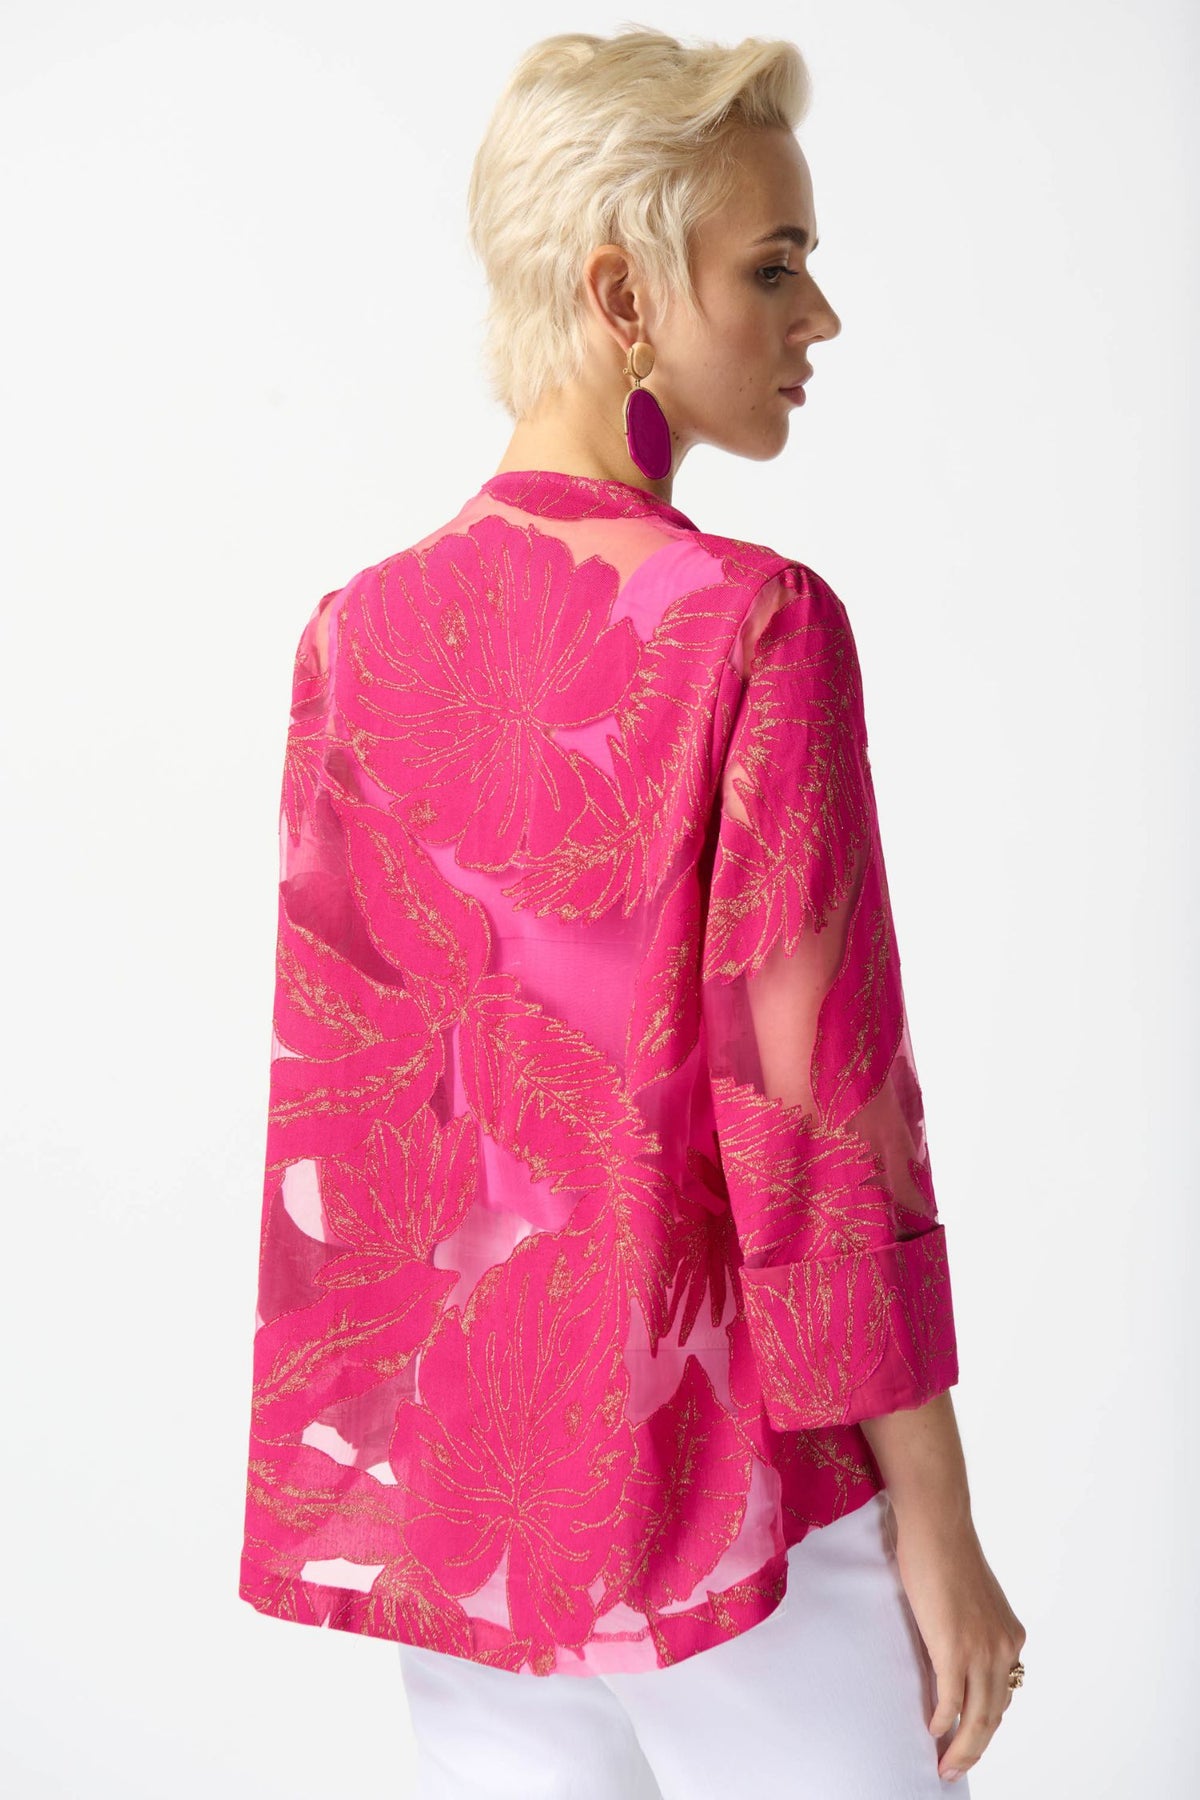 Joseph Ribkoff Jacquard Tropical Print Swing Jacket - Style 242219, back, pink